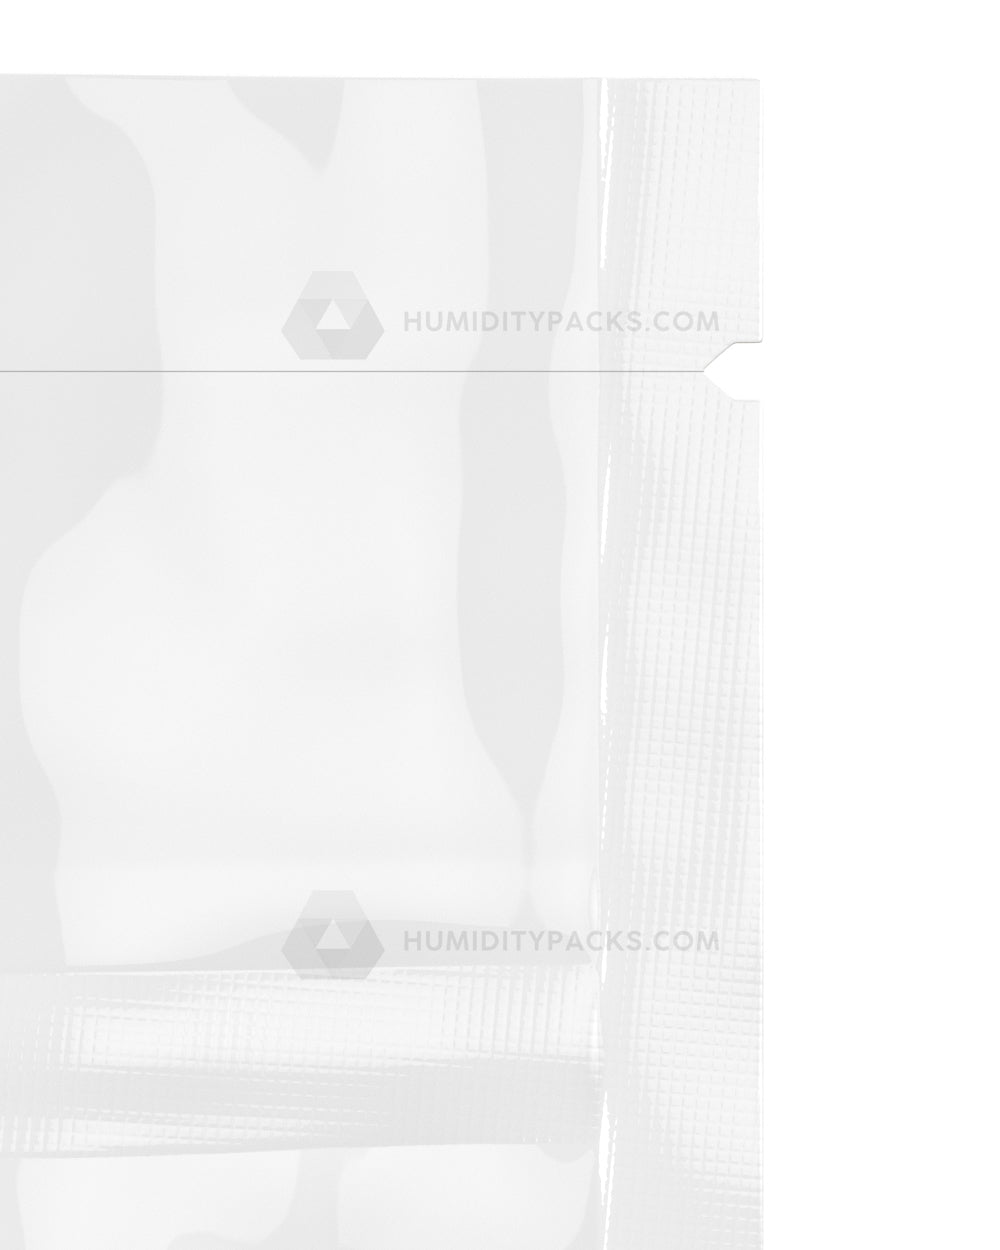 Glossy-White 4" x 6.5" Mylar Tamper Evident Bags (7 grams) 1000/Box